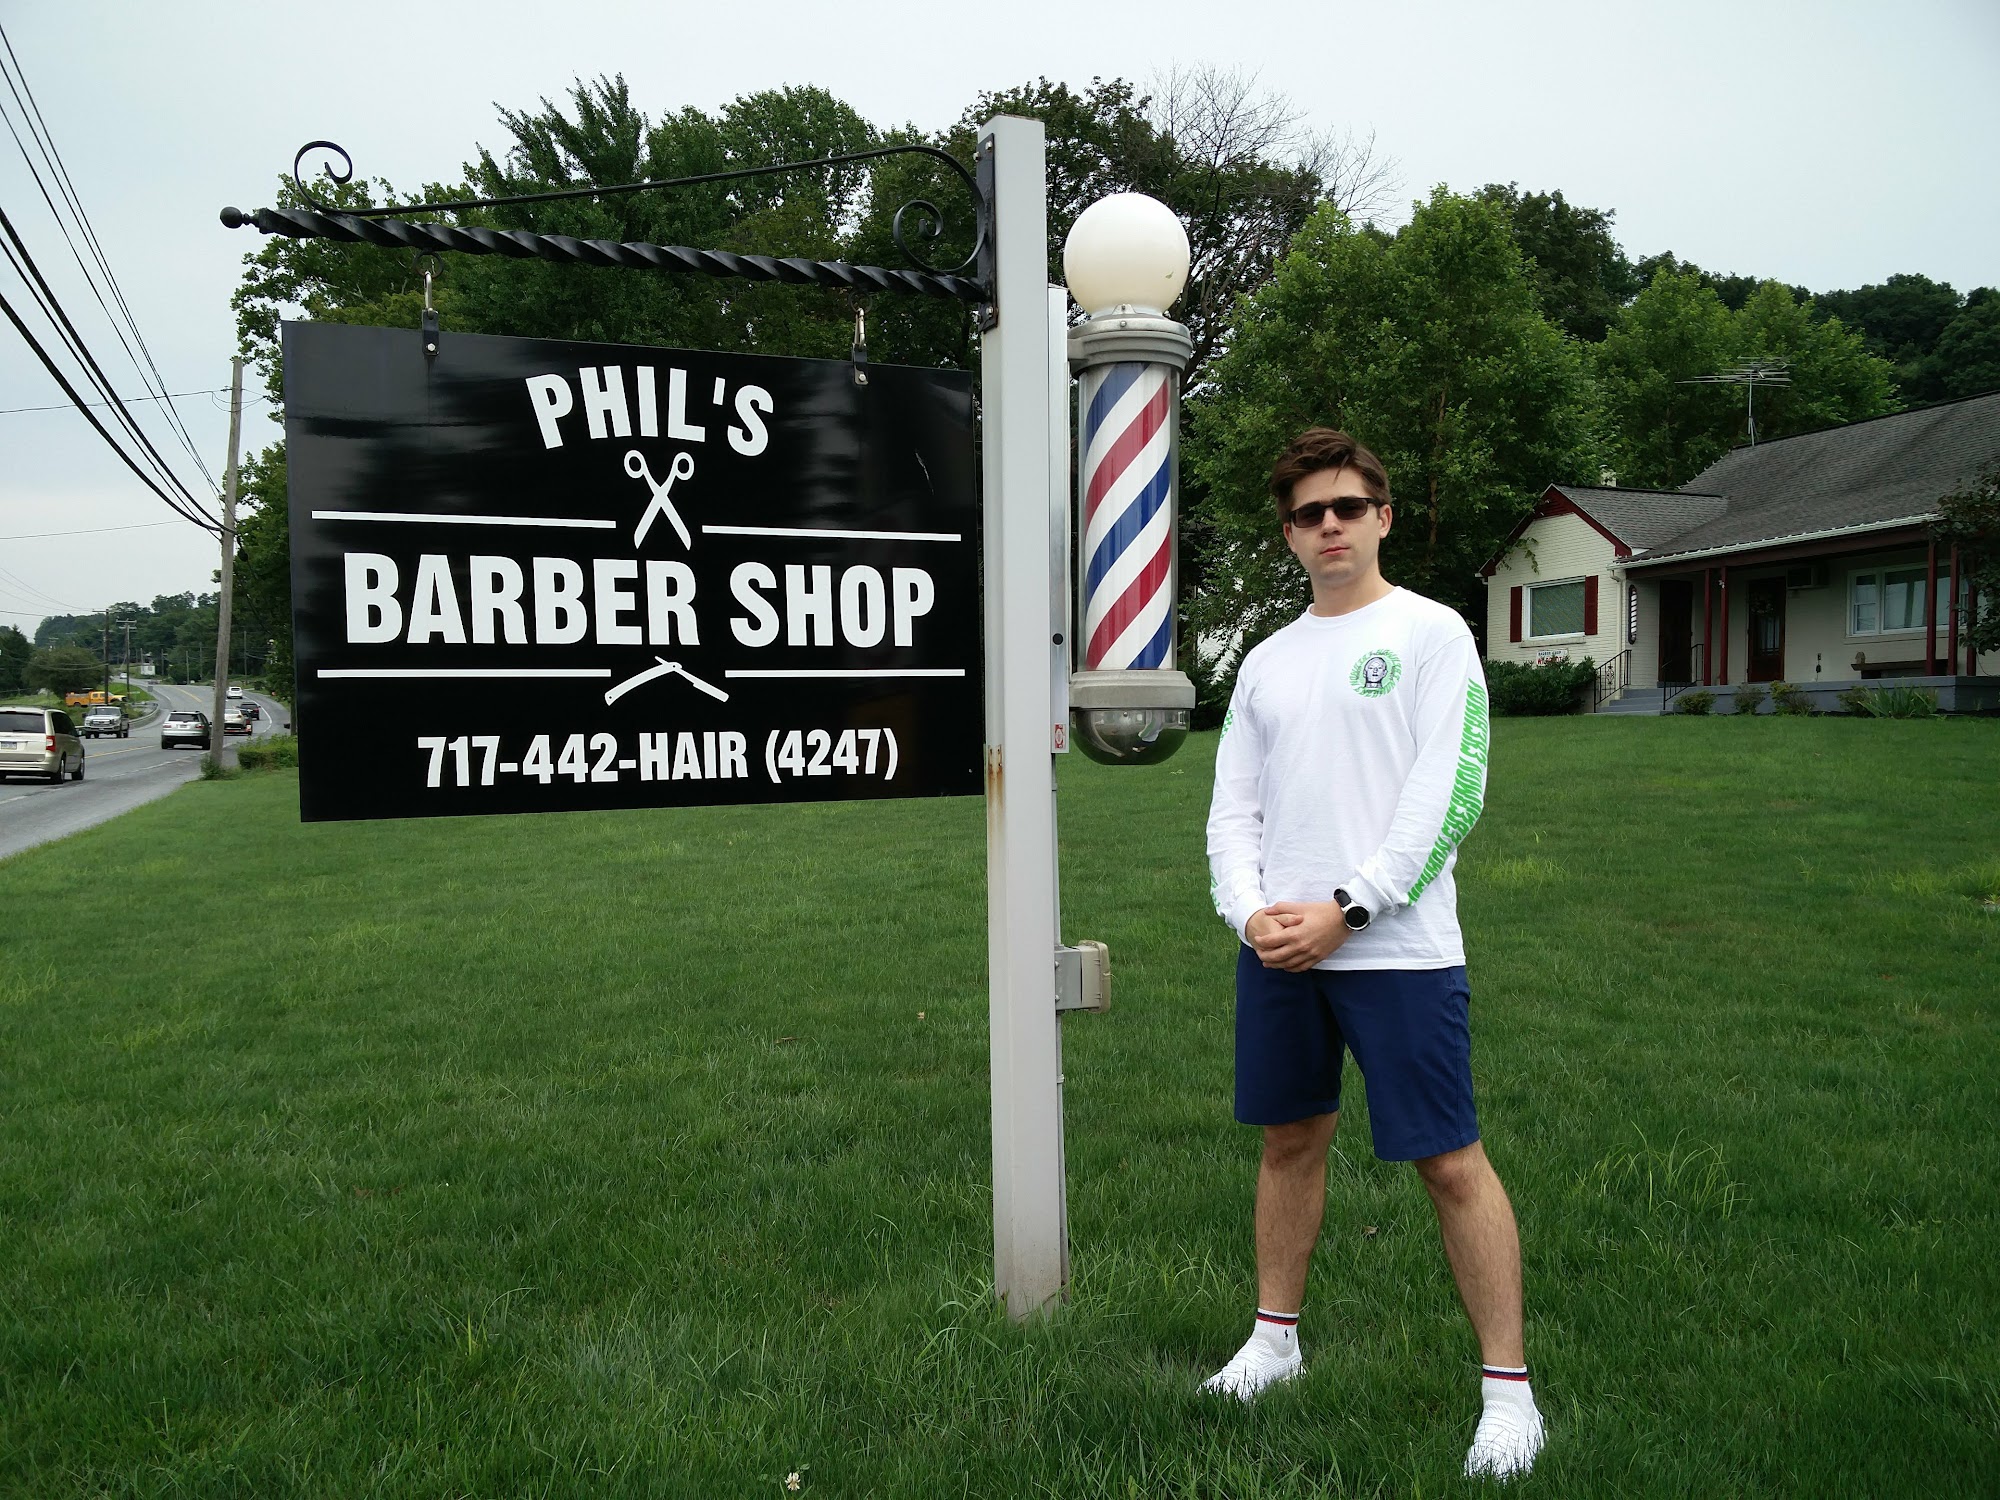 Phil's Barber Shop 5426 Lincoln Hwy, Gap Pennsylvania 17527